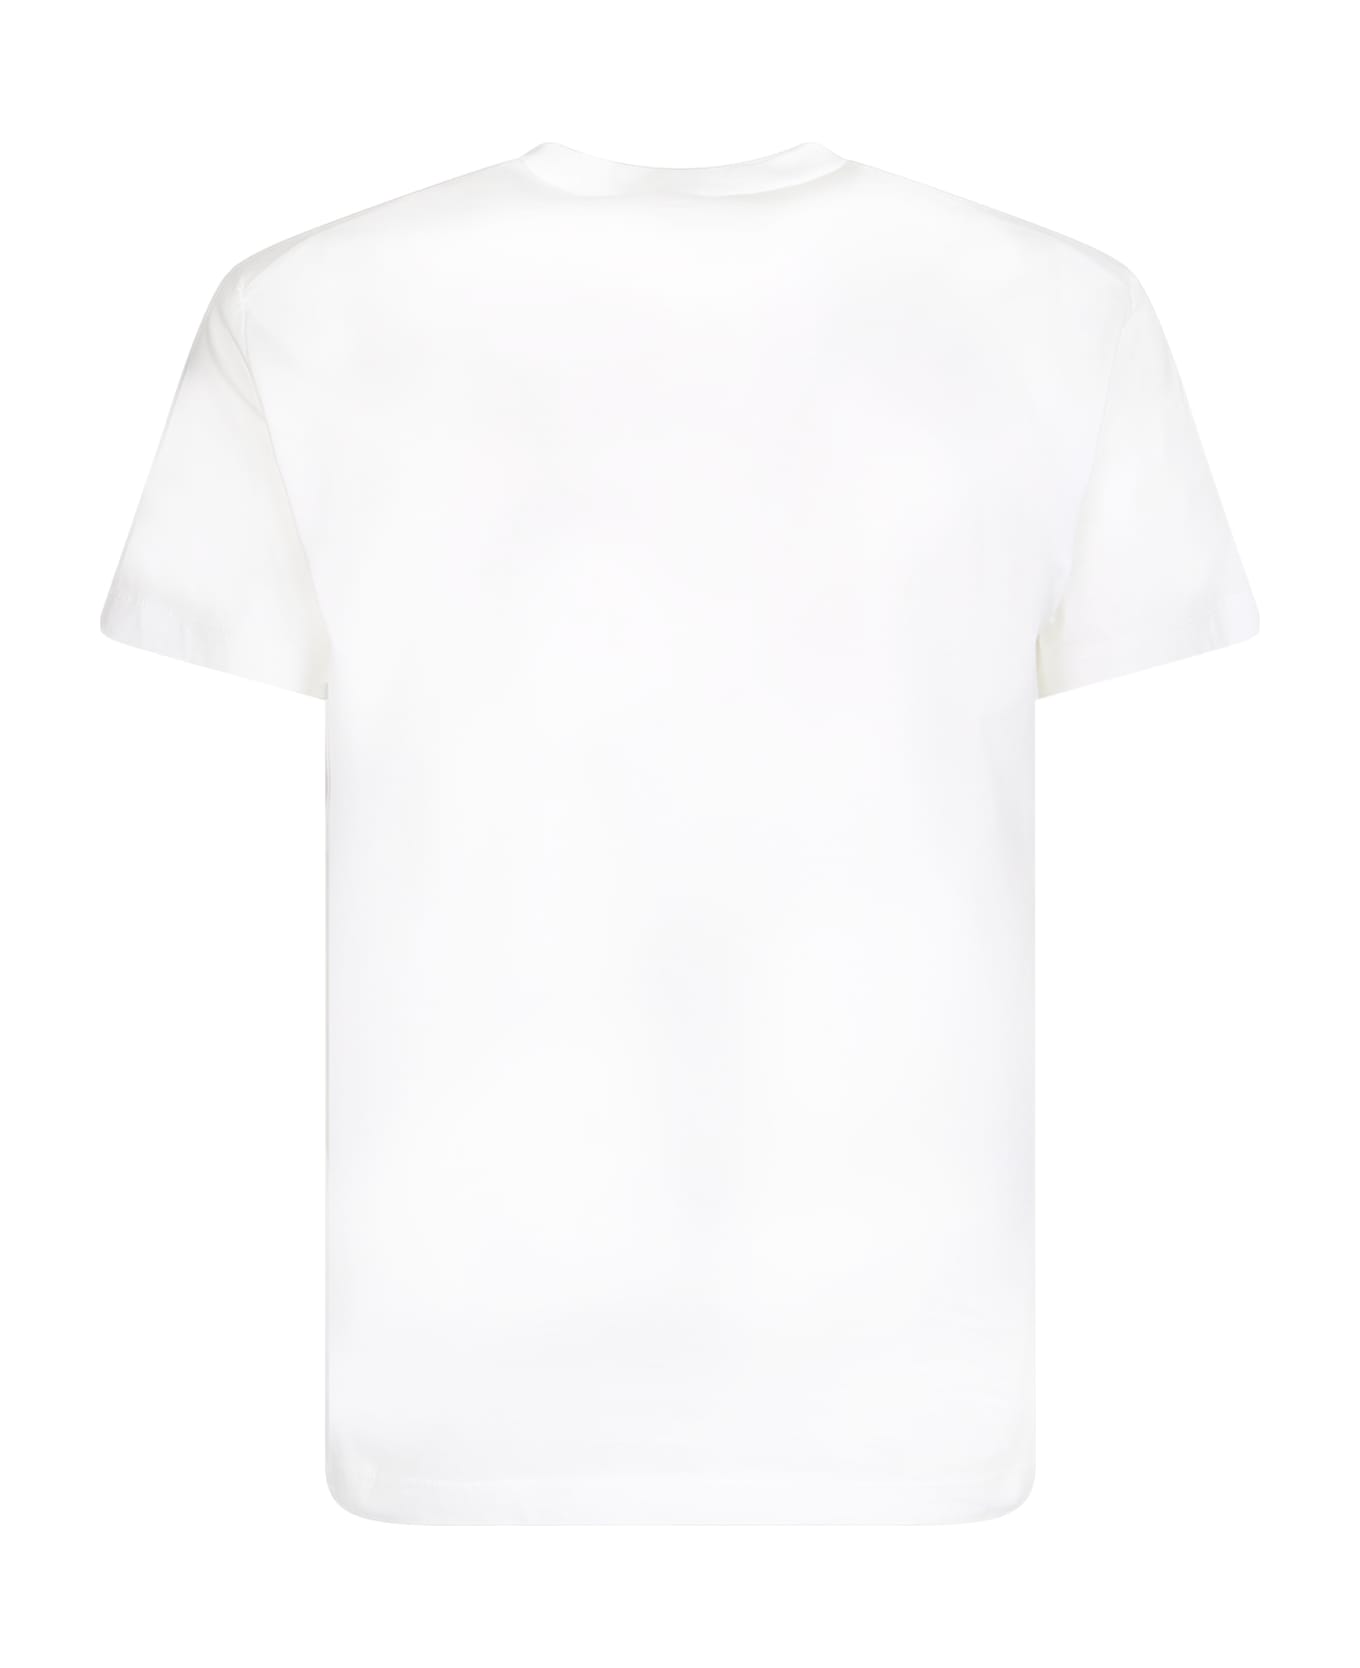 Dsquared2 Cotton Logo T-shirt - White